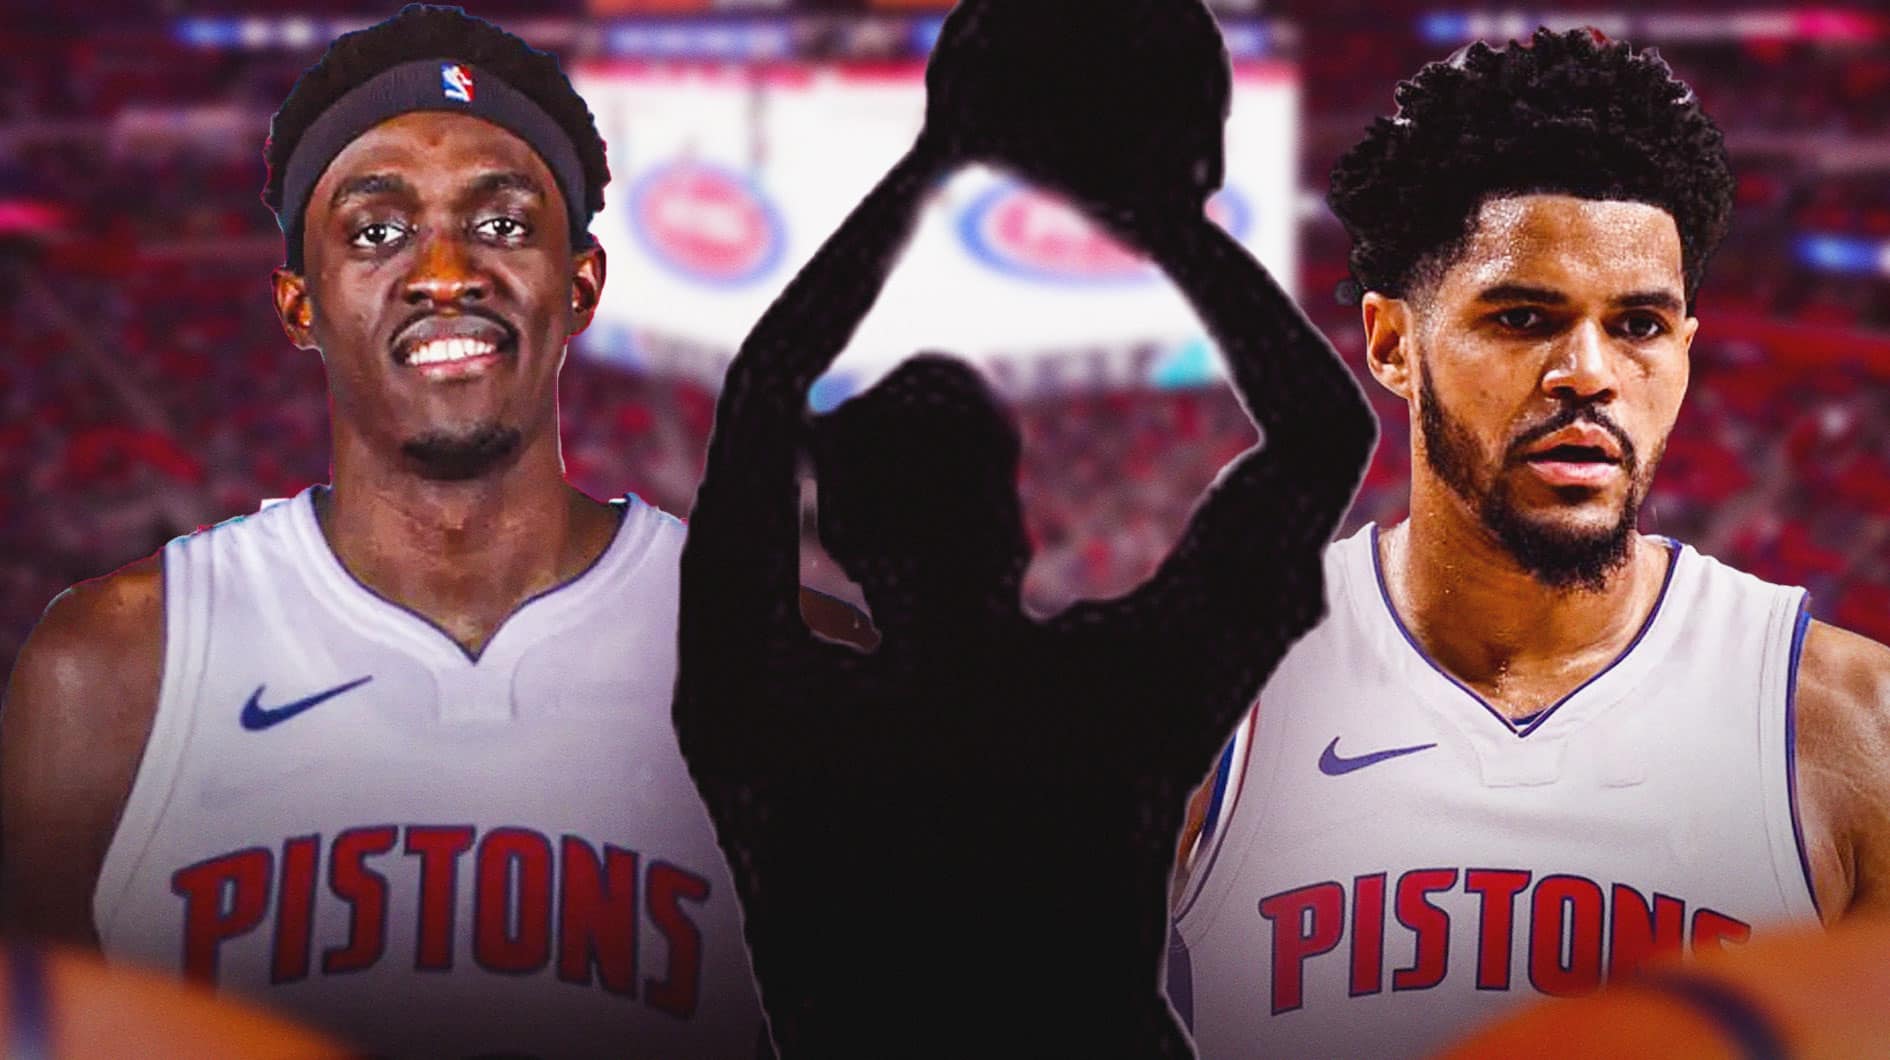 Pistons leadership jersey